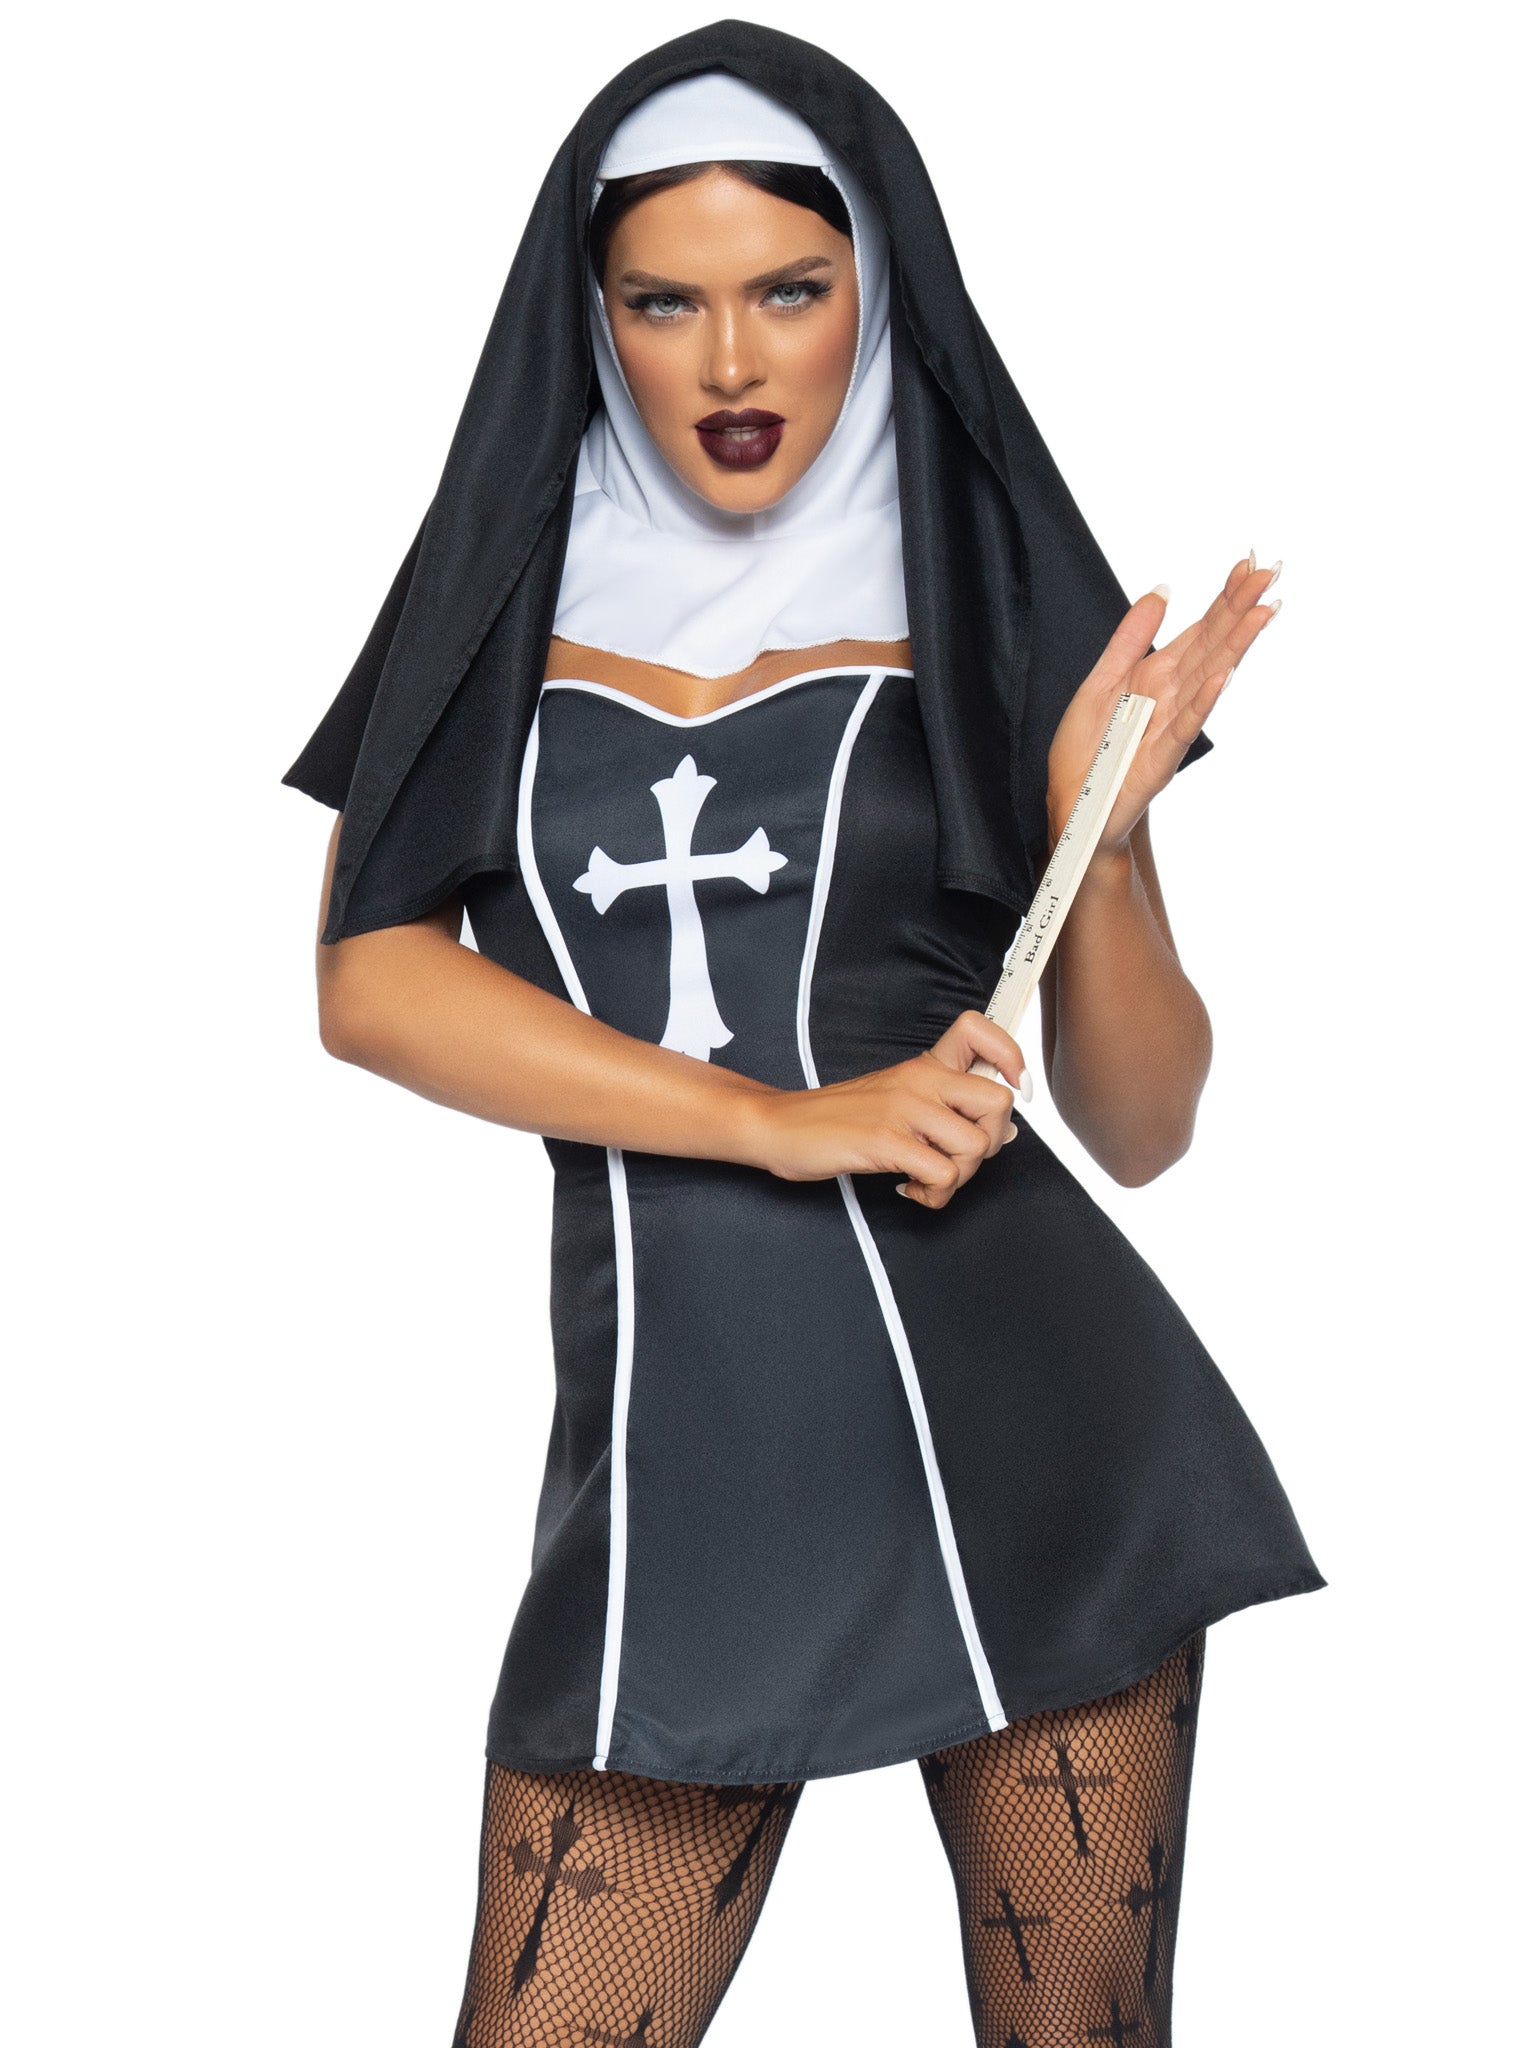 Sexy Nun Dress, Nun Costume for Woman, Halloween Costume Woman